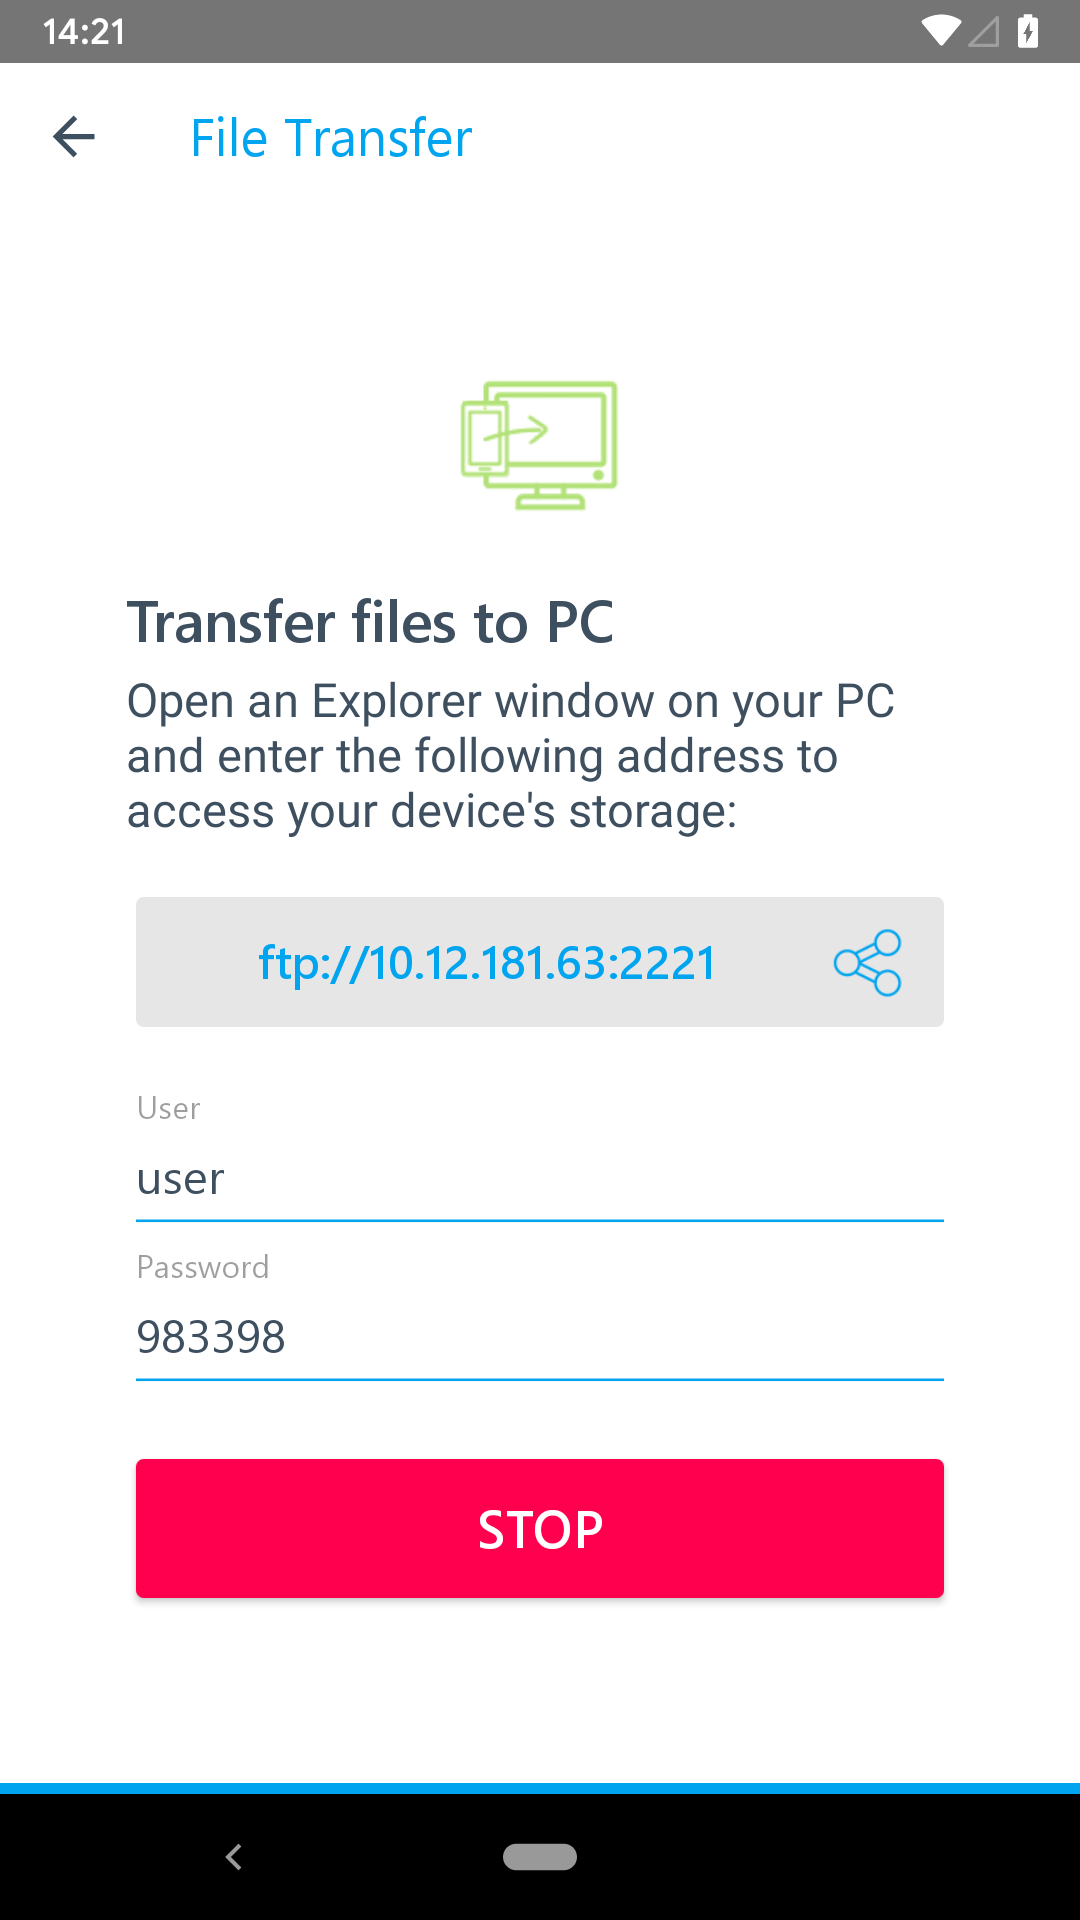 File Transfer